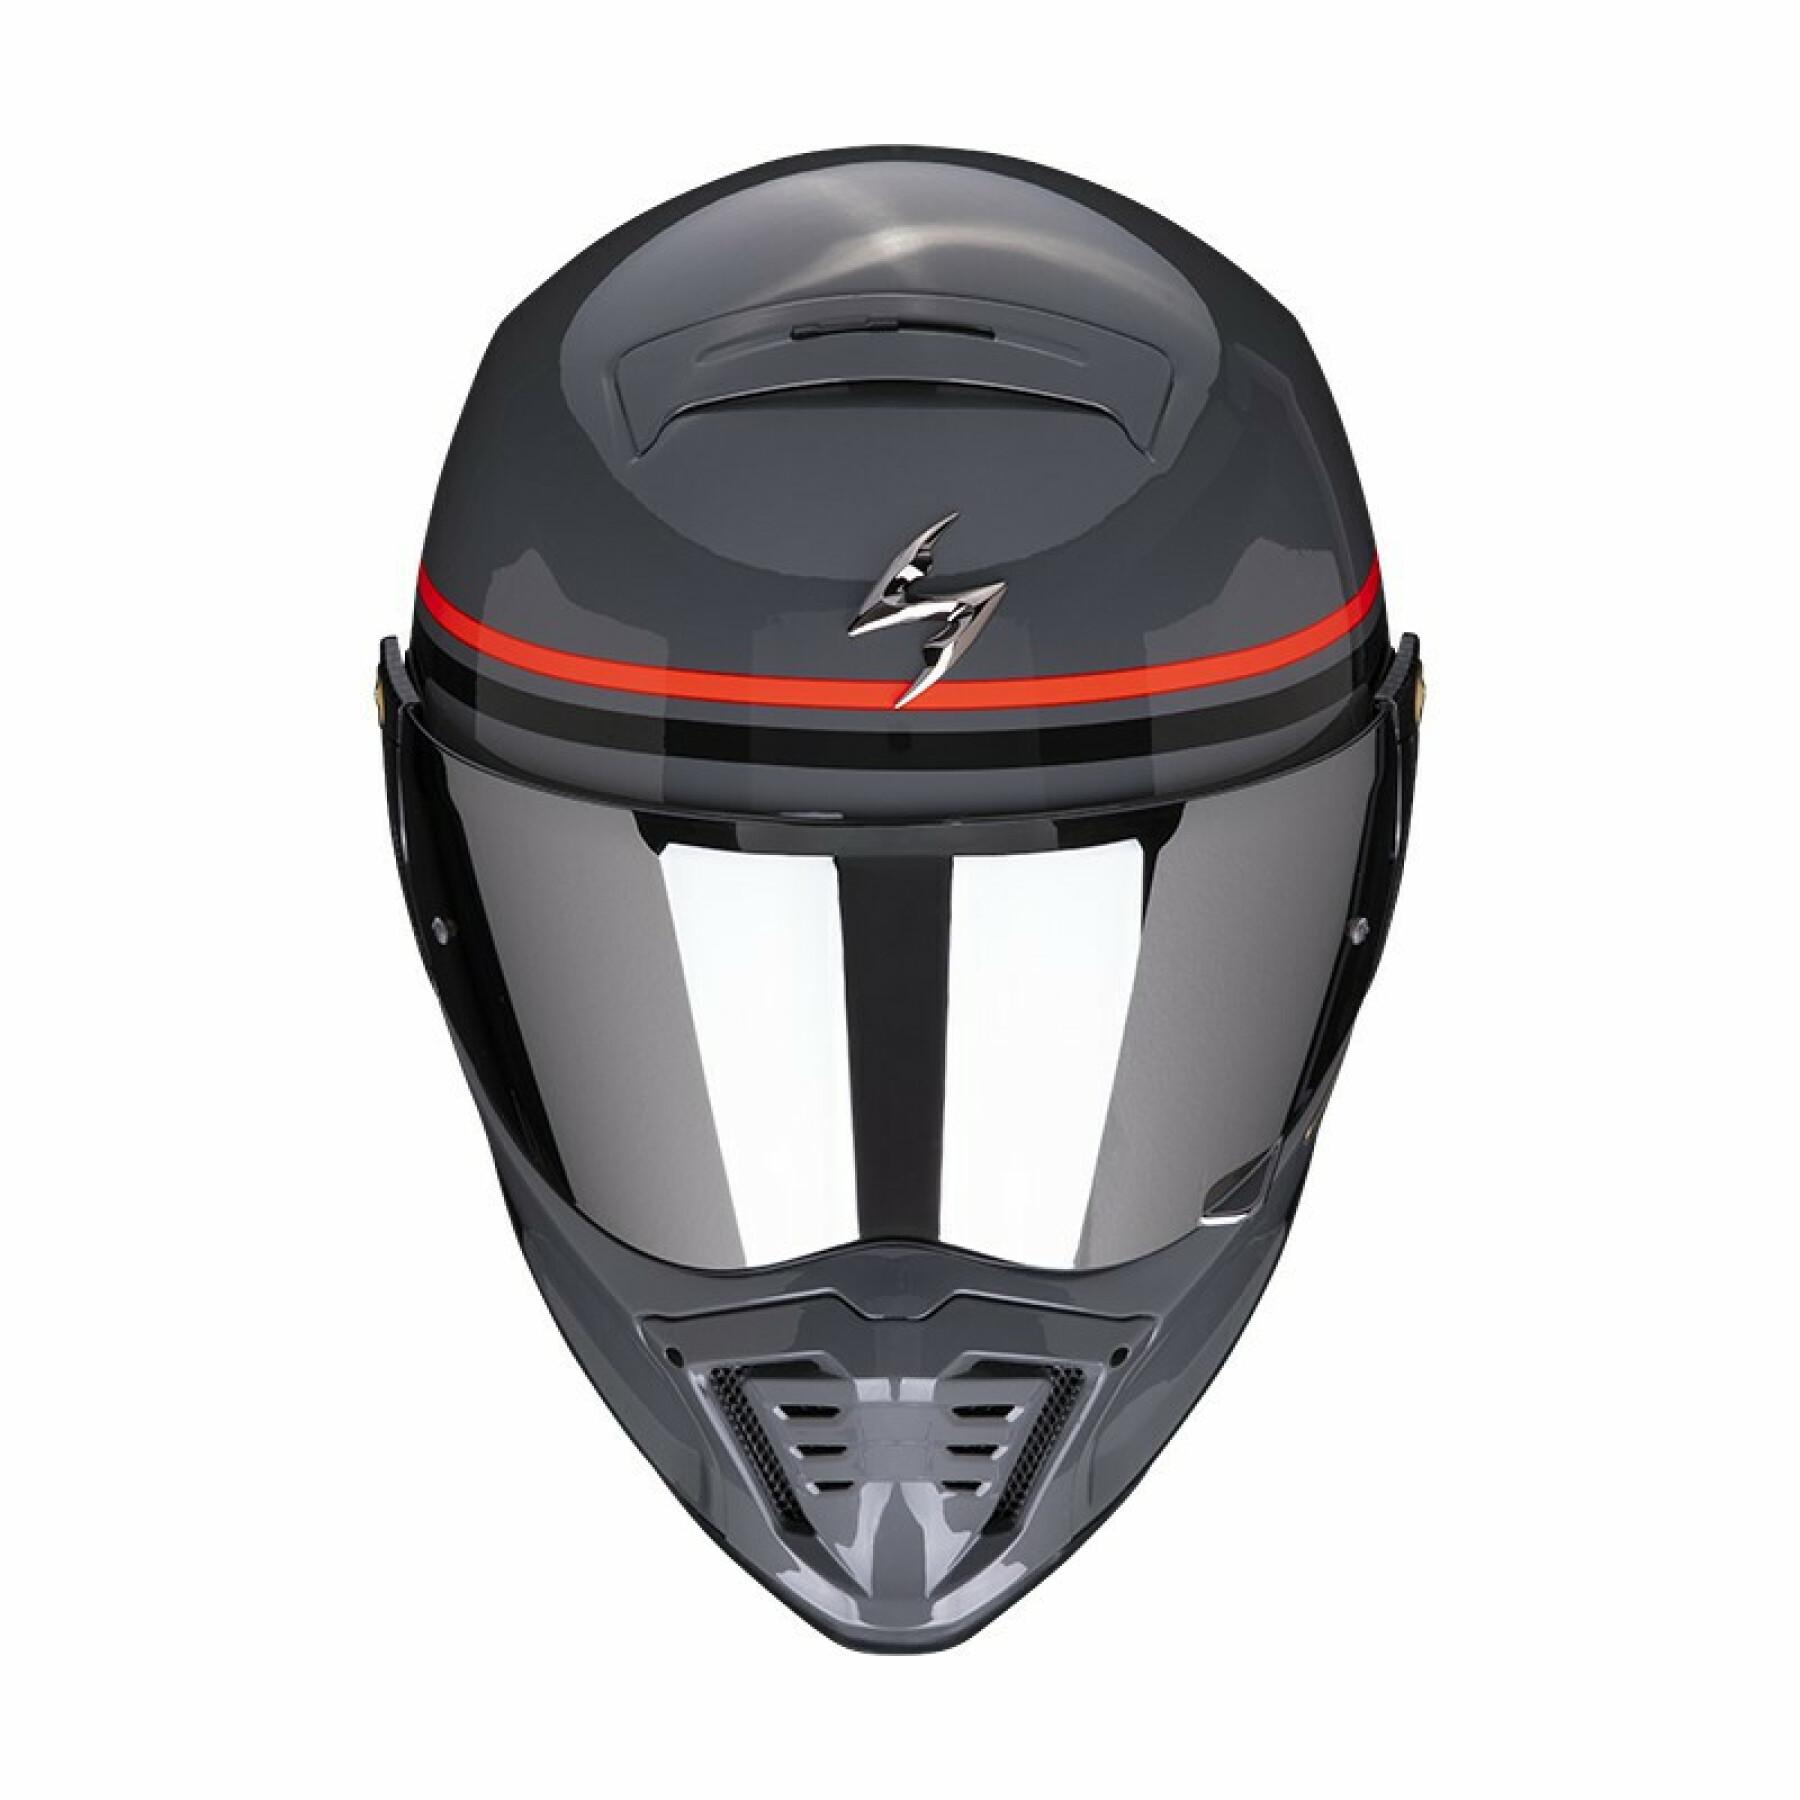 Full face helmet Scorpion Exo-HX1 NOSTALGIA